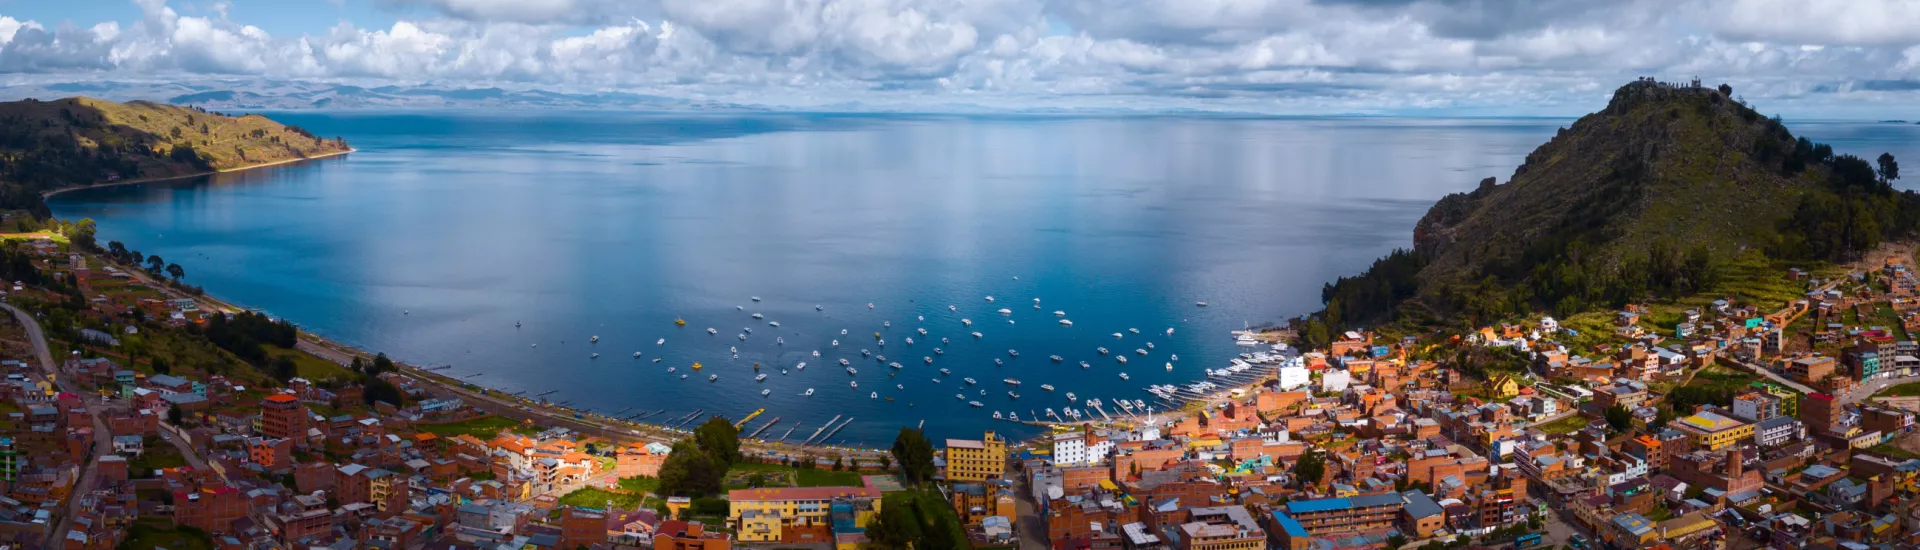 Panorama of Lake Titicaca and the city of Copacobana, Bolivia 